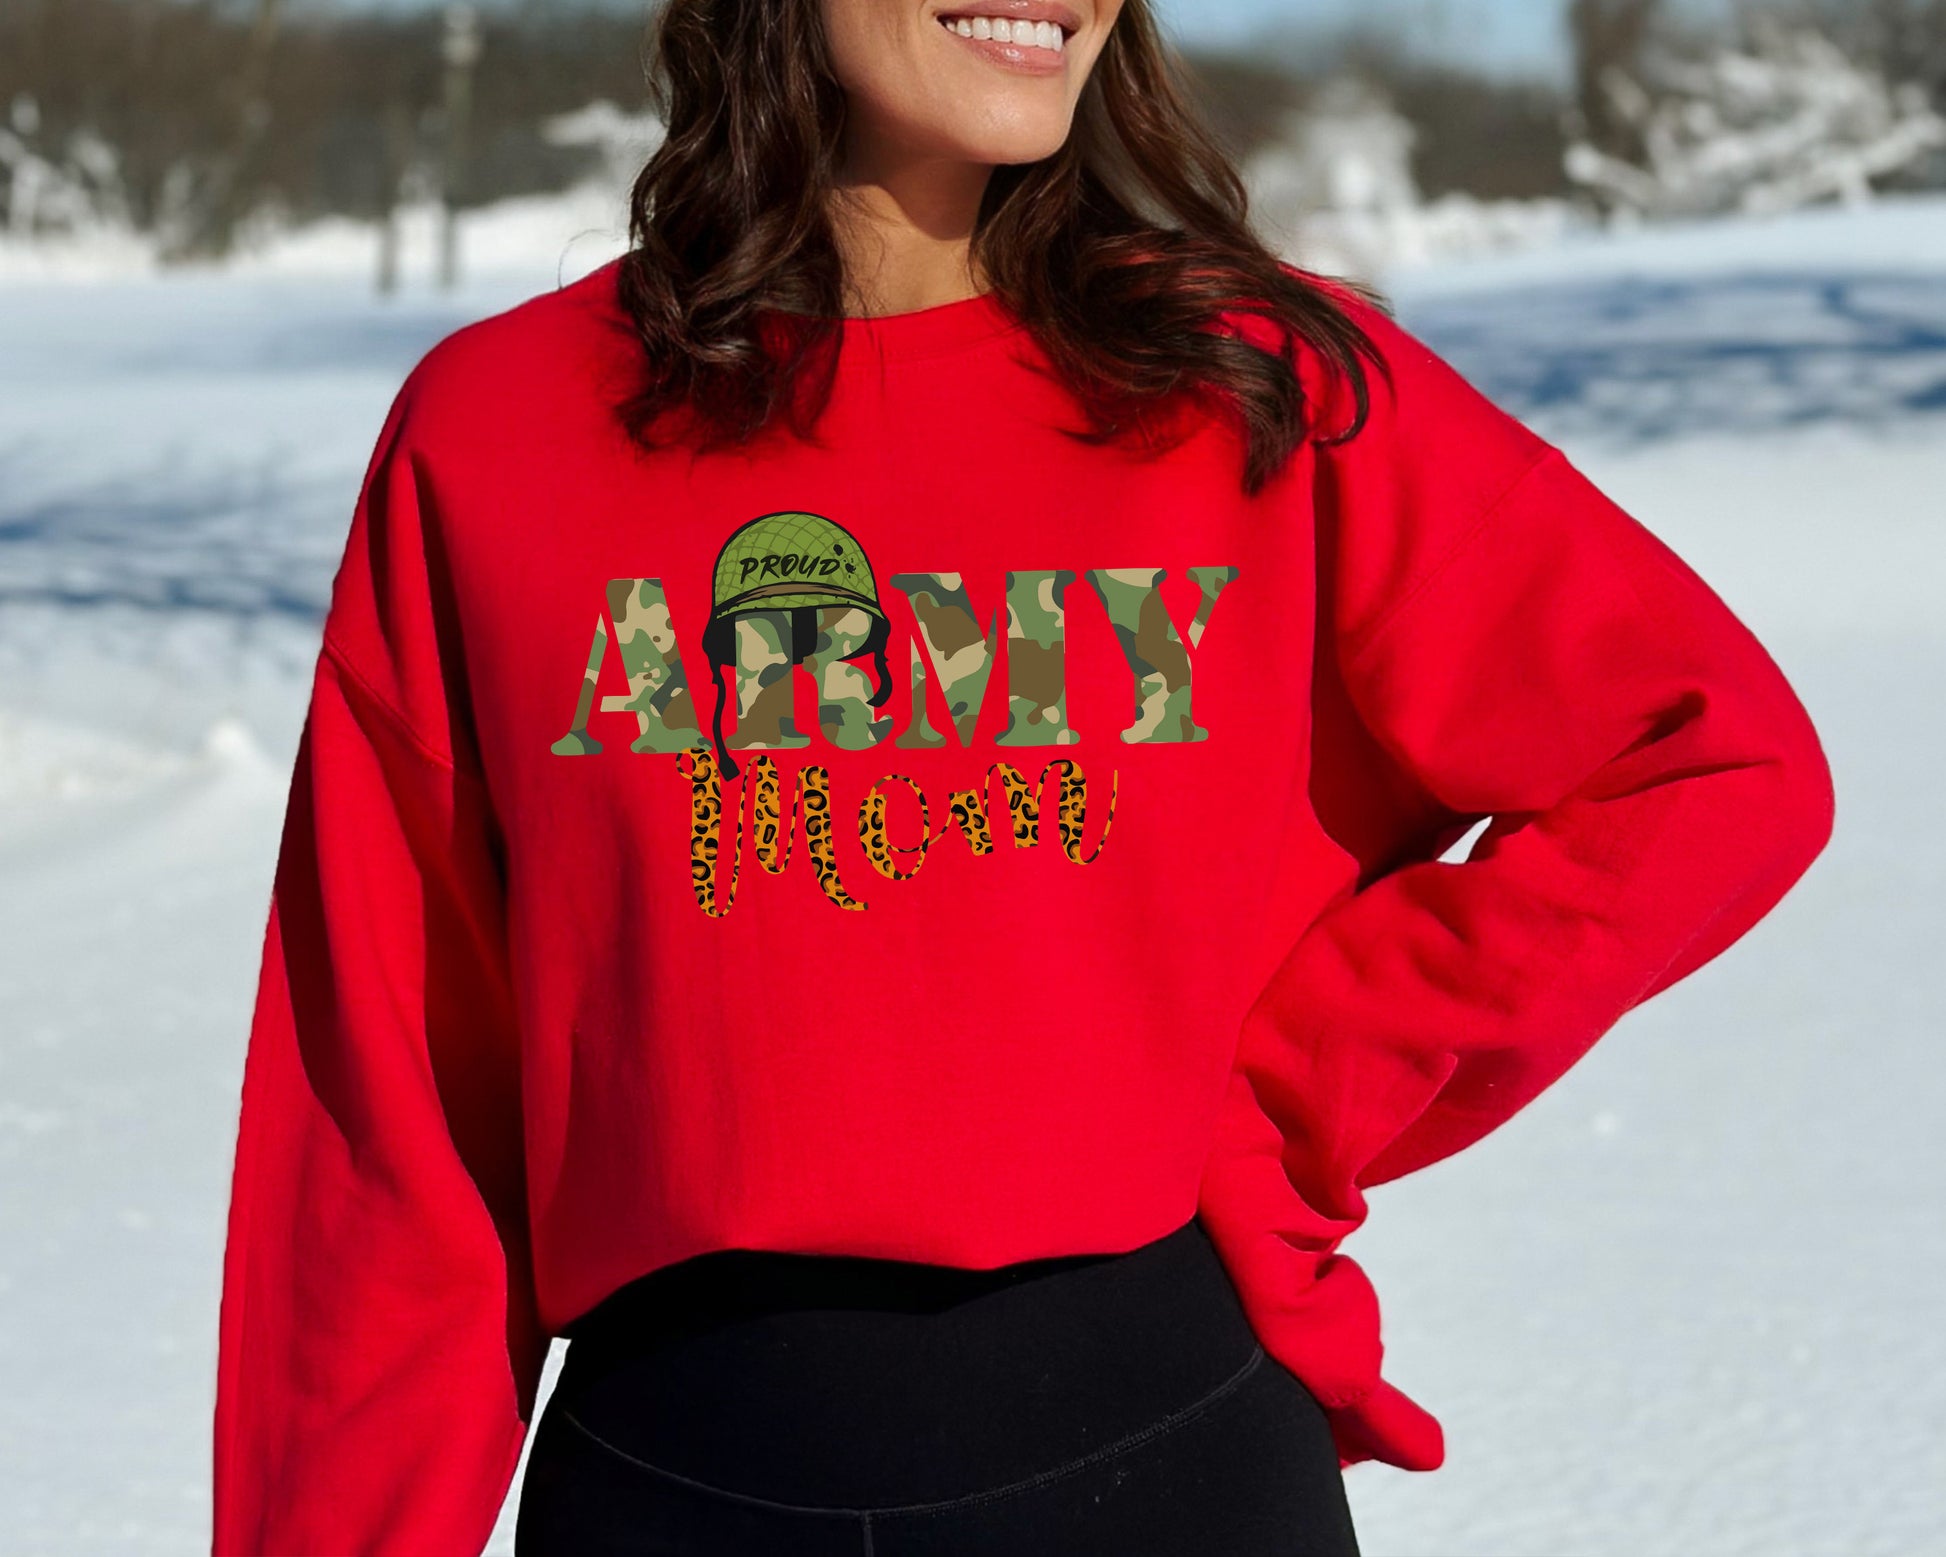 Army Mom Sweatshirt, Gifts For Army Mom, Proud Army Mom Hoodie-newamarketing